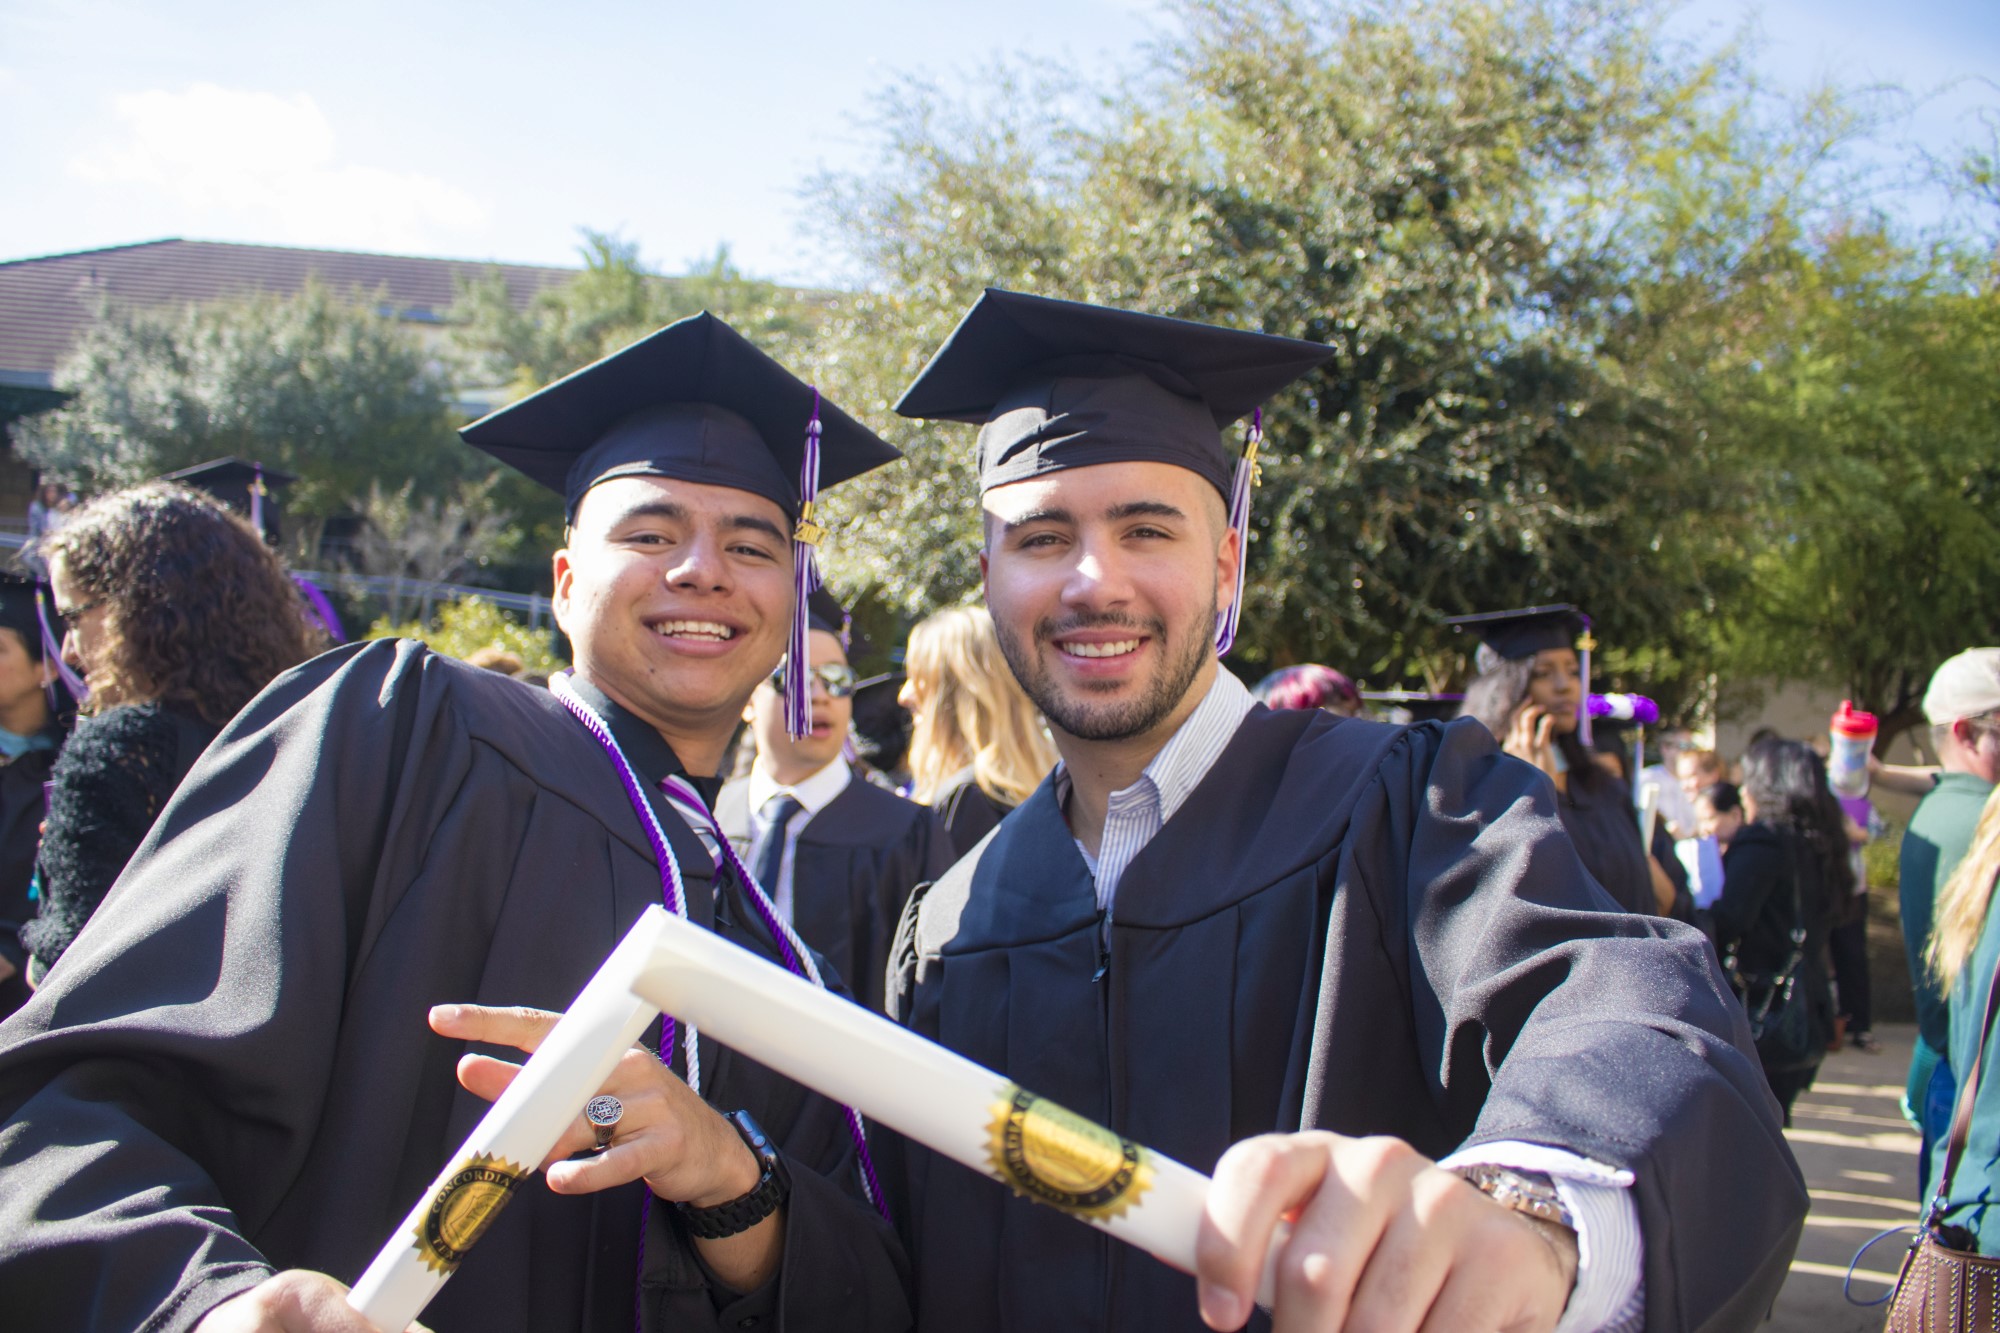 Two proud graduates